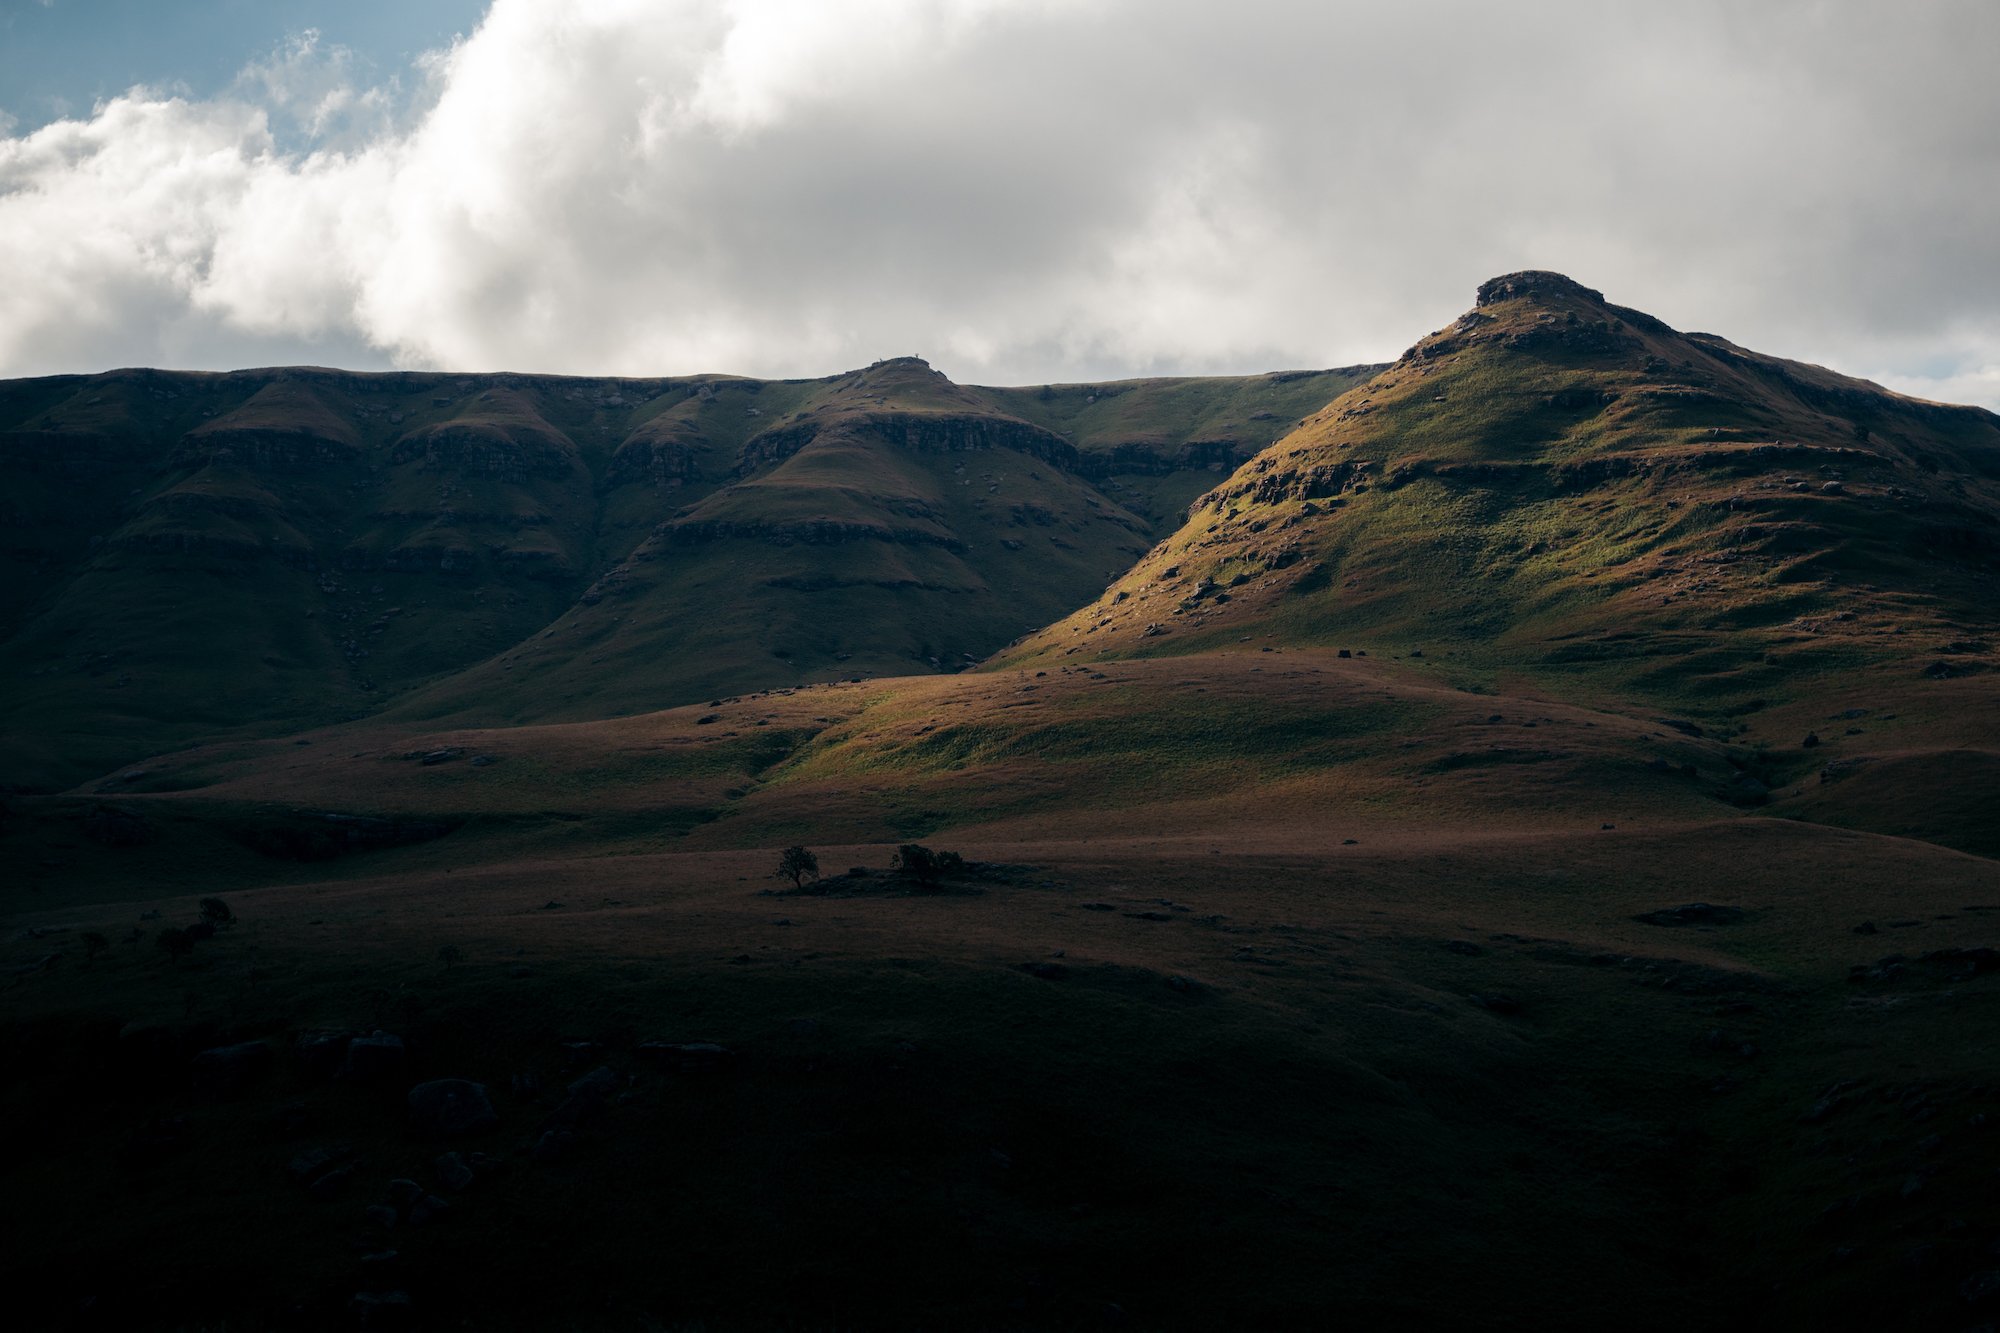 Mountain ranges of the Southern Drakensberg